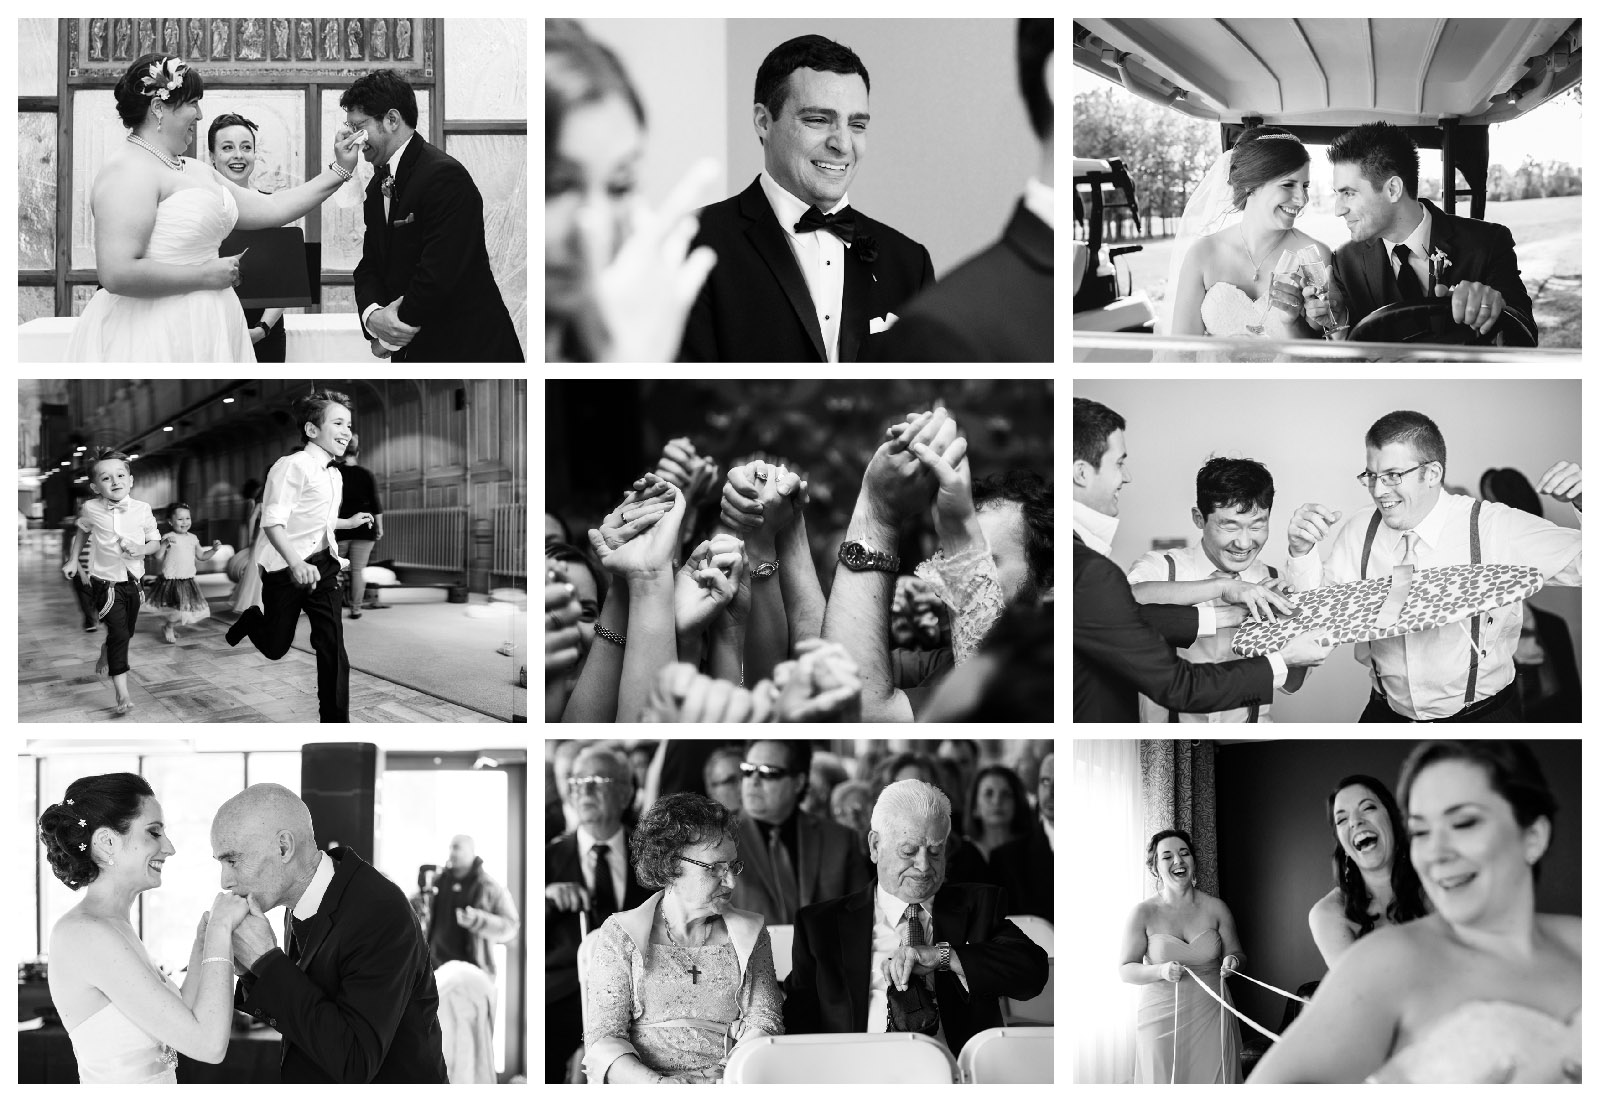 9 images of emotional wedding moments